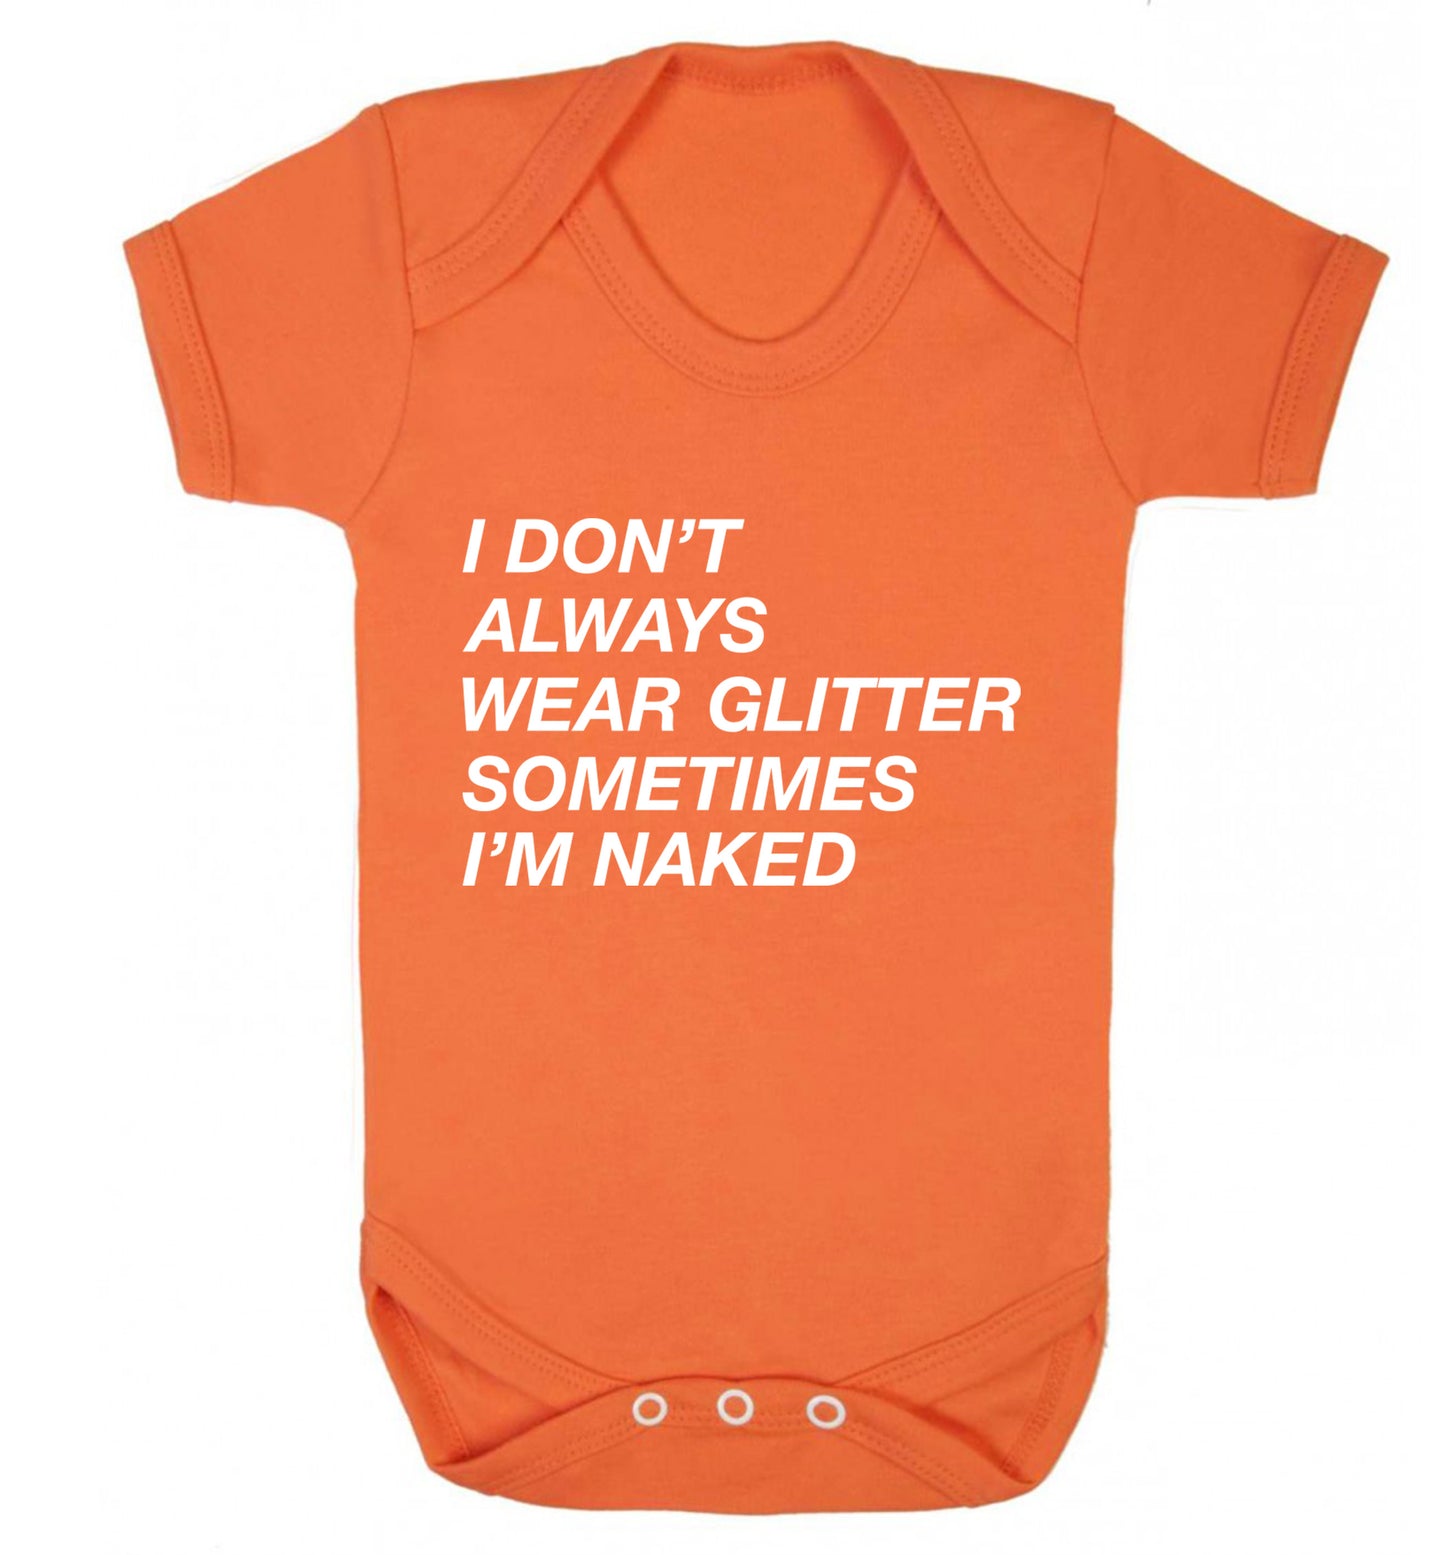 I don't always wear glitter sometimes I'm naked! Baby Vest orange 18-24 months